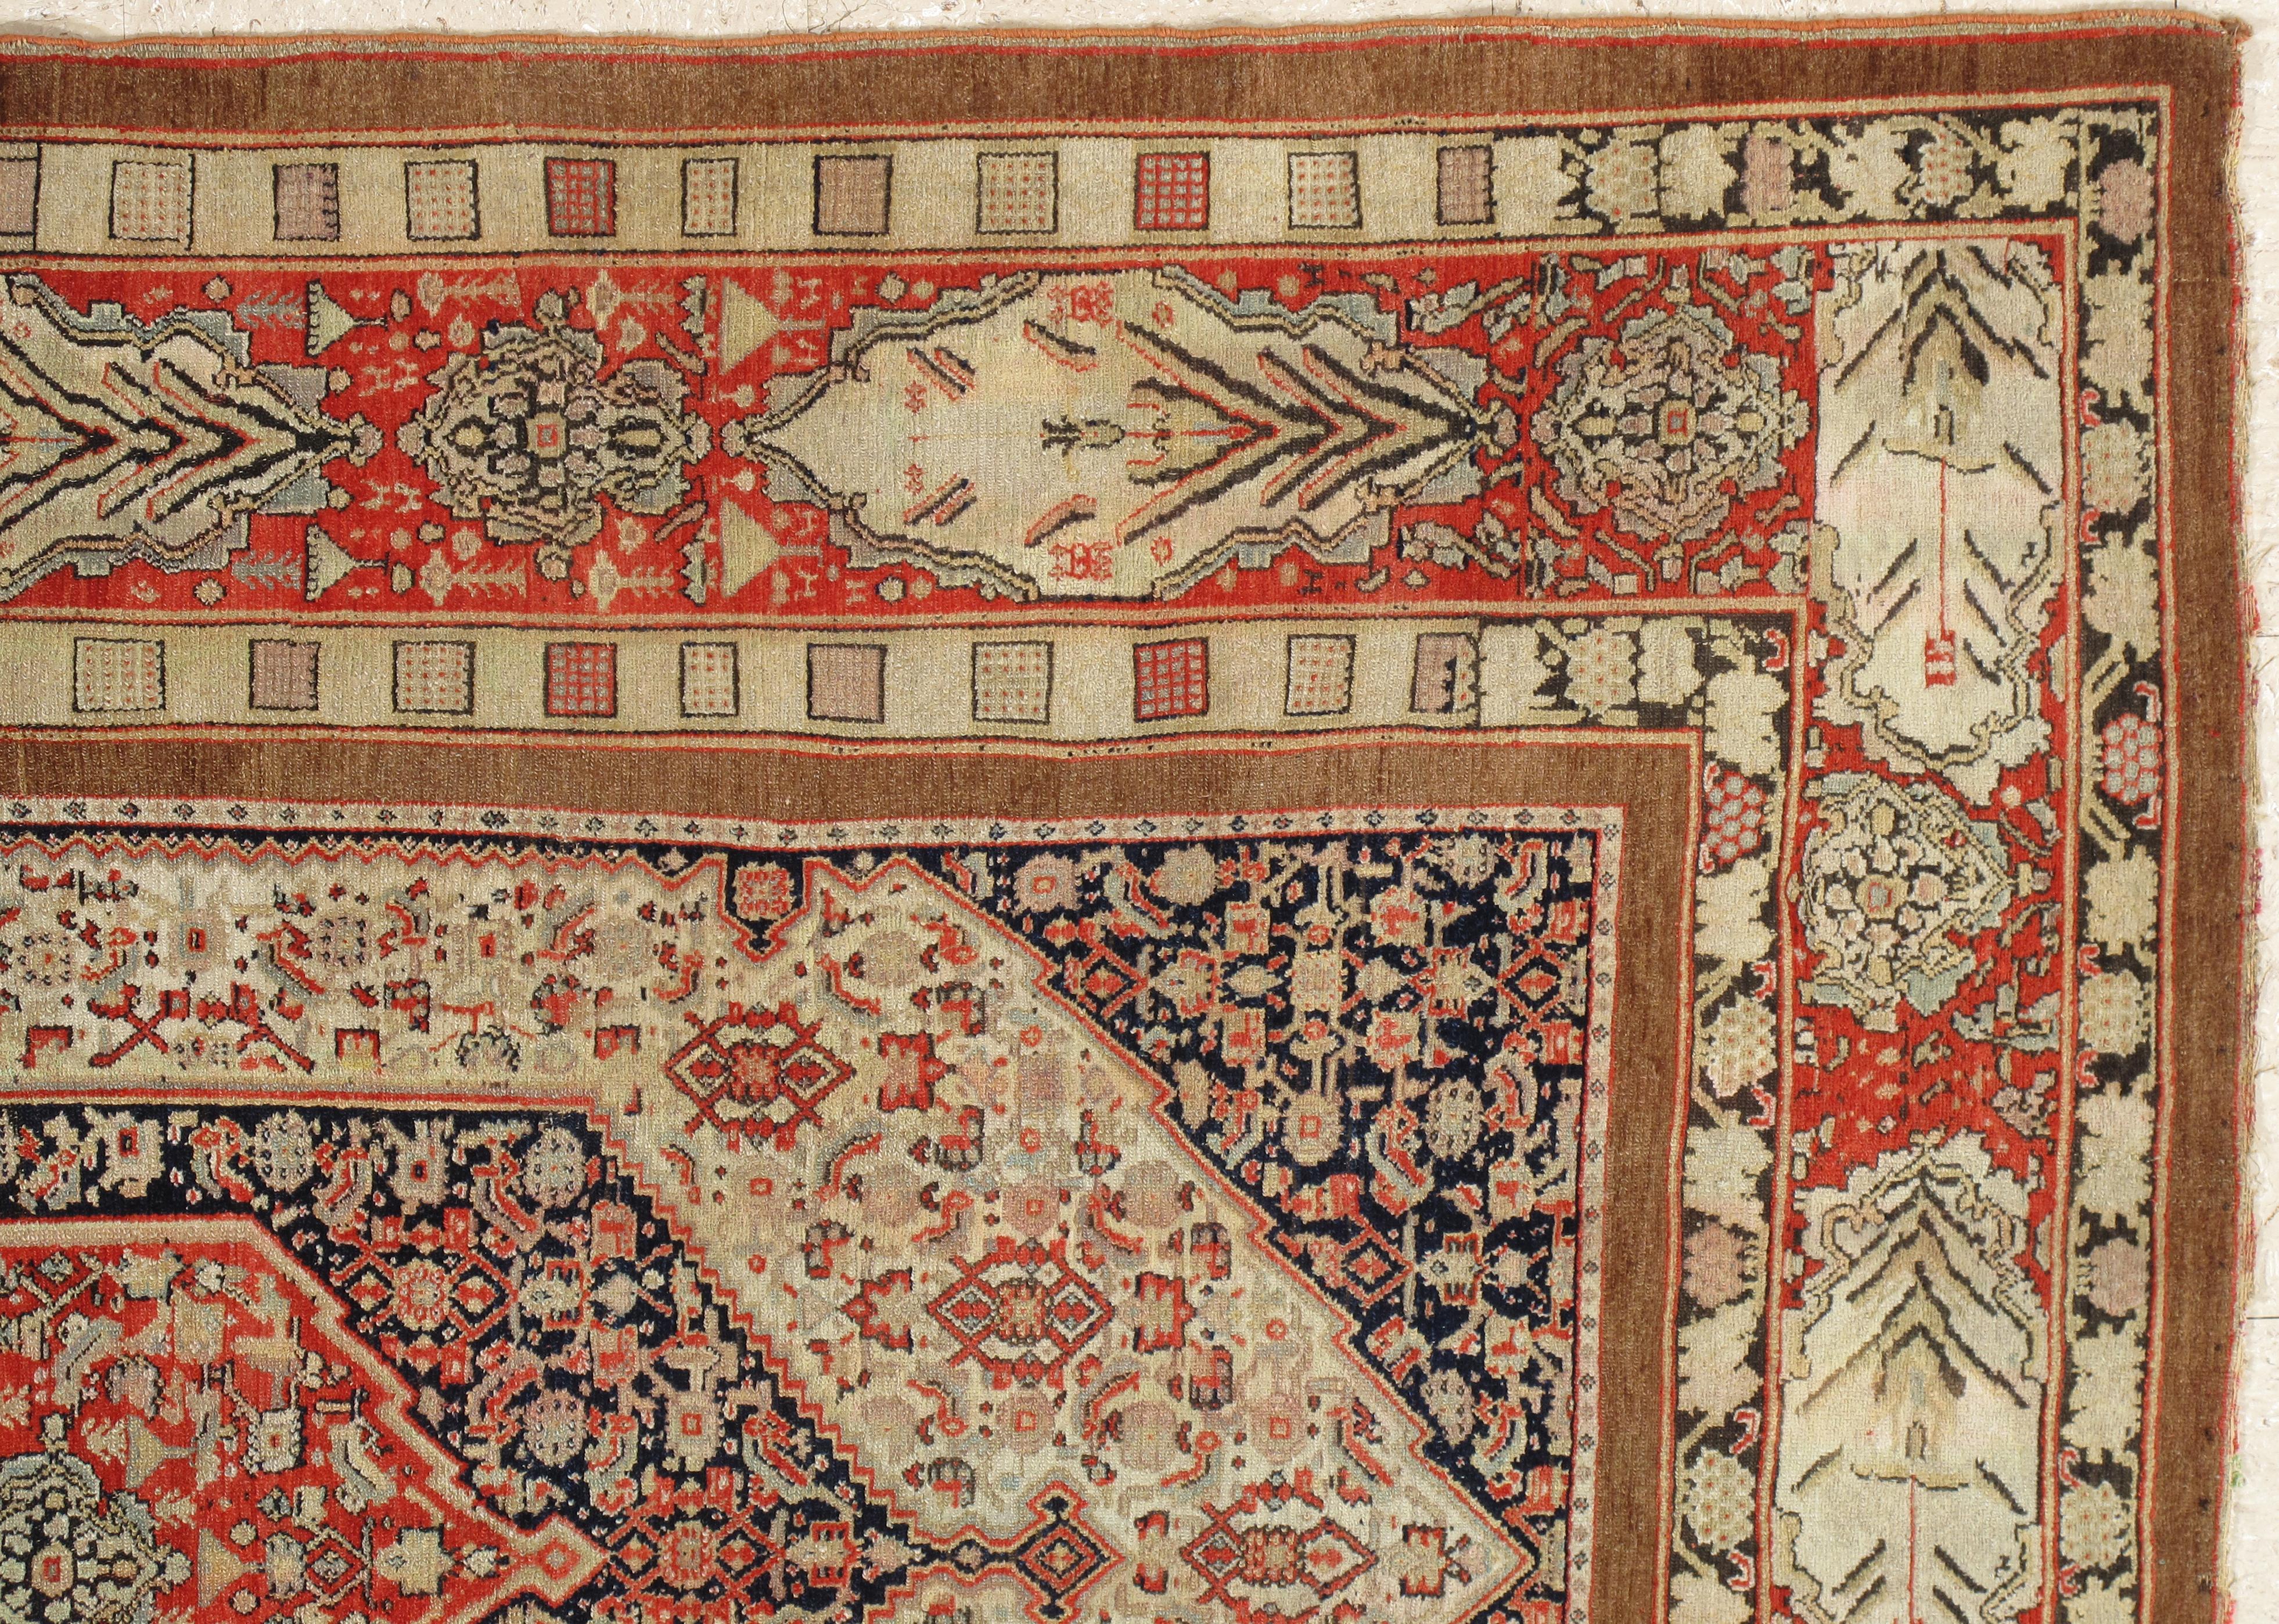 Antique silk warp Senneh woven in dark earth tone colors. Silk warp Sennehs are often referred to as 